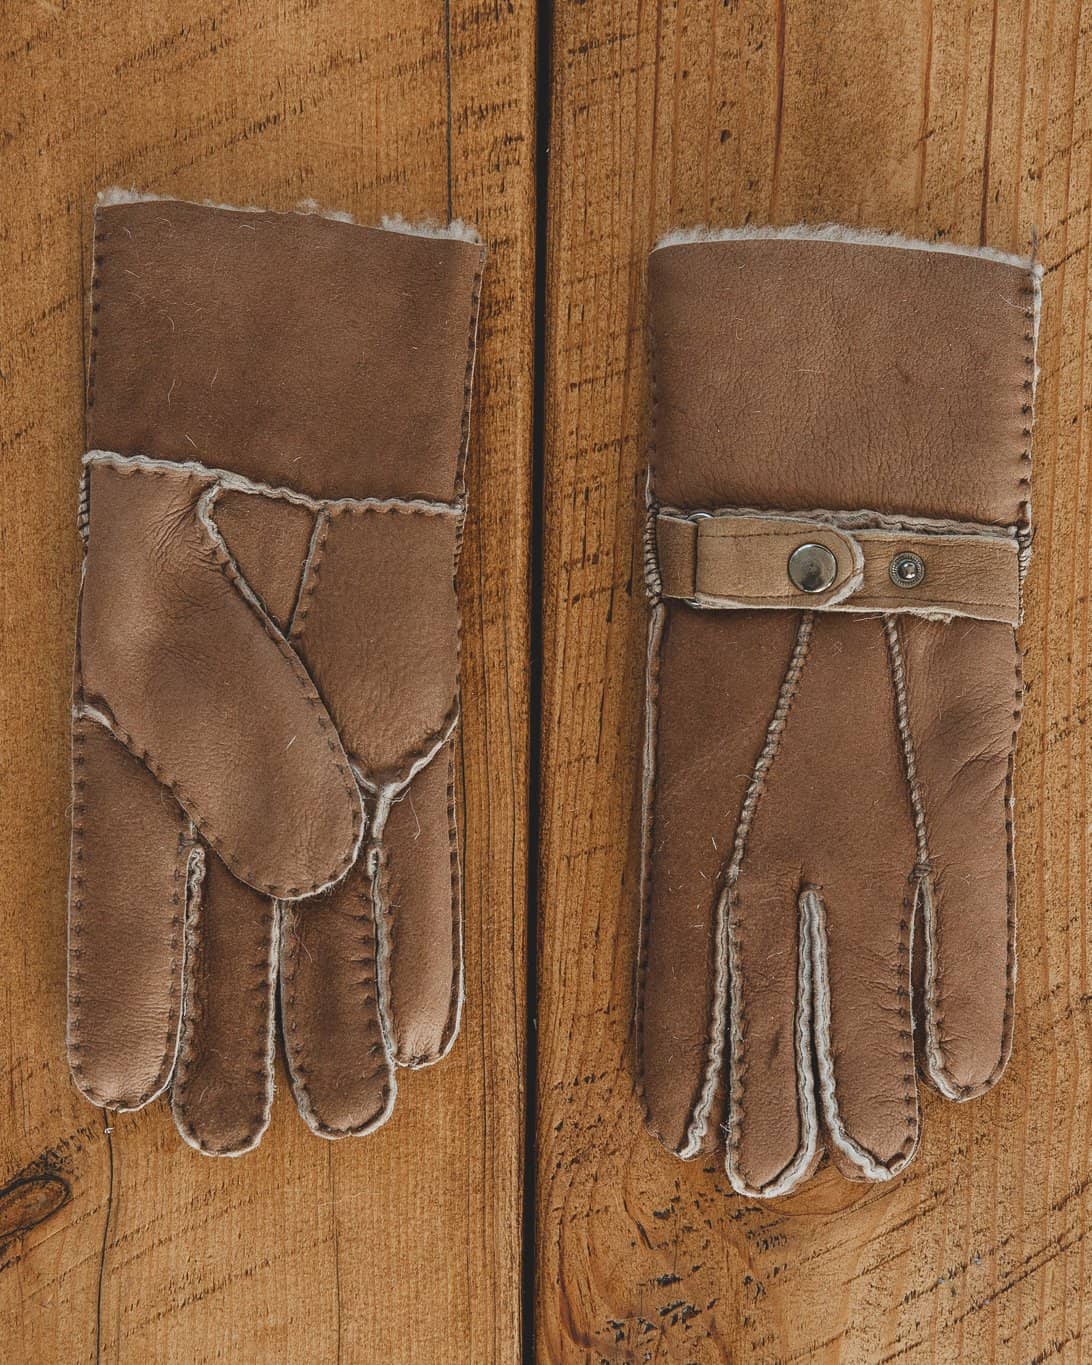 Nordvek womens sheepskin gloves 311-100 brown with model opening stable door